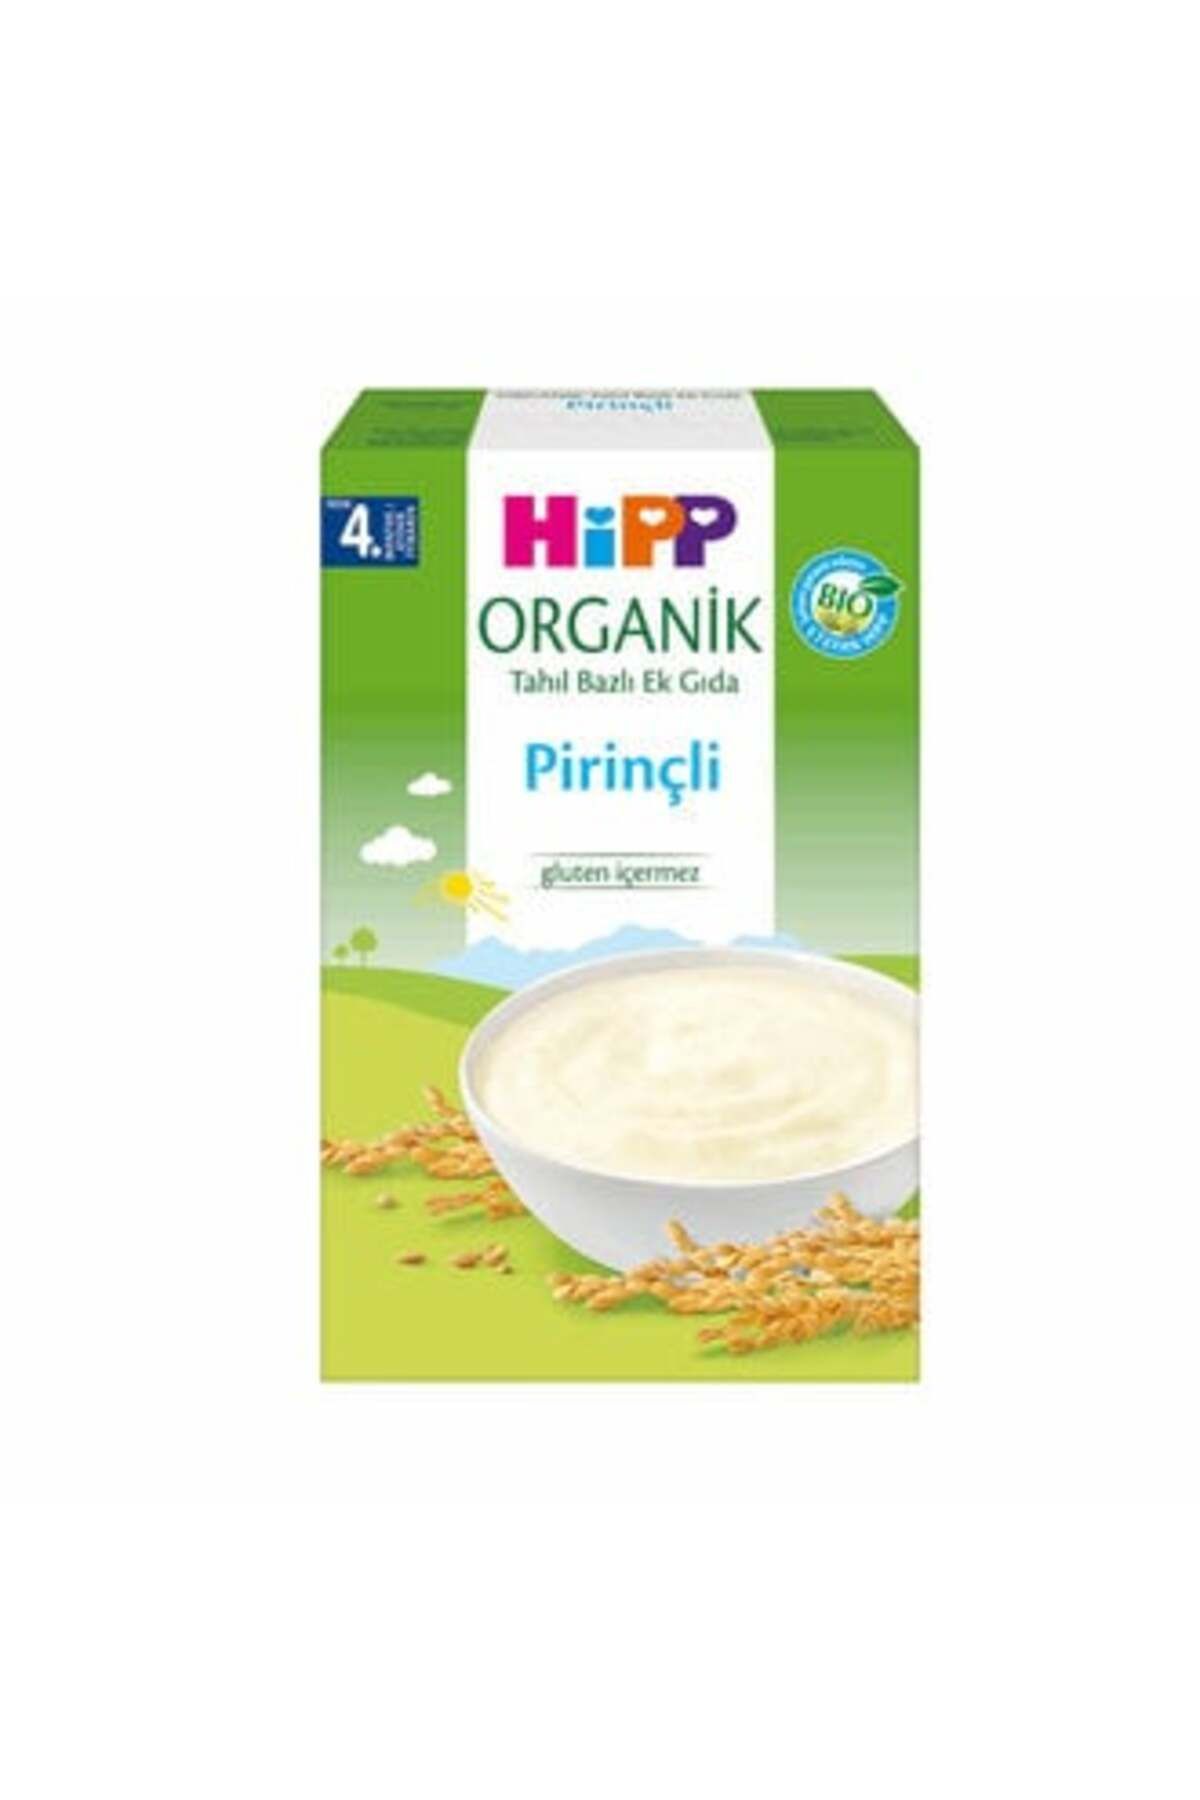 Hipp Organik Pirinçli Tahıl Bazlı Ek Gıda 200 G ( 5 ADET )